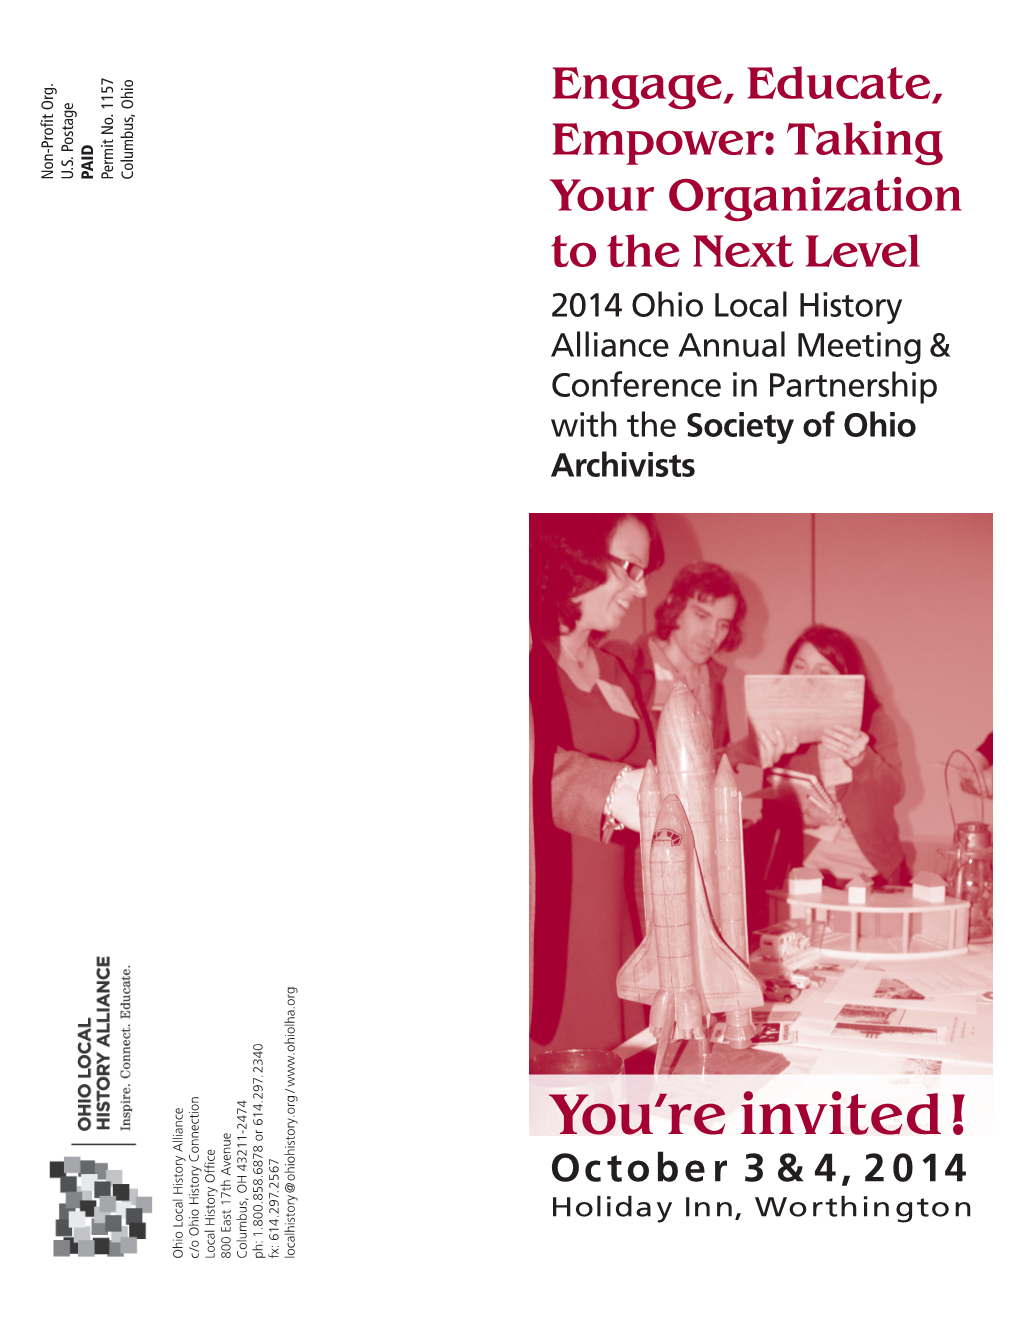 2014 Annual Meeting